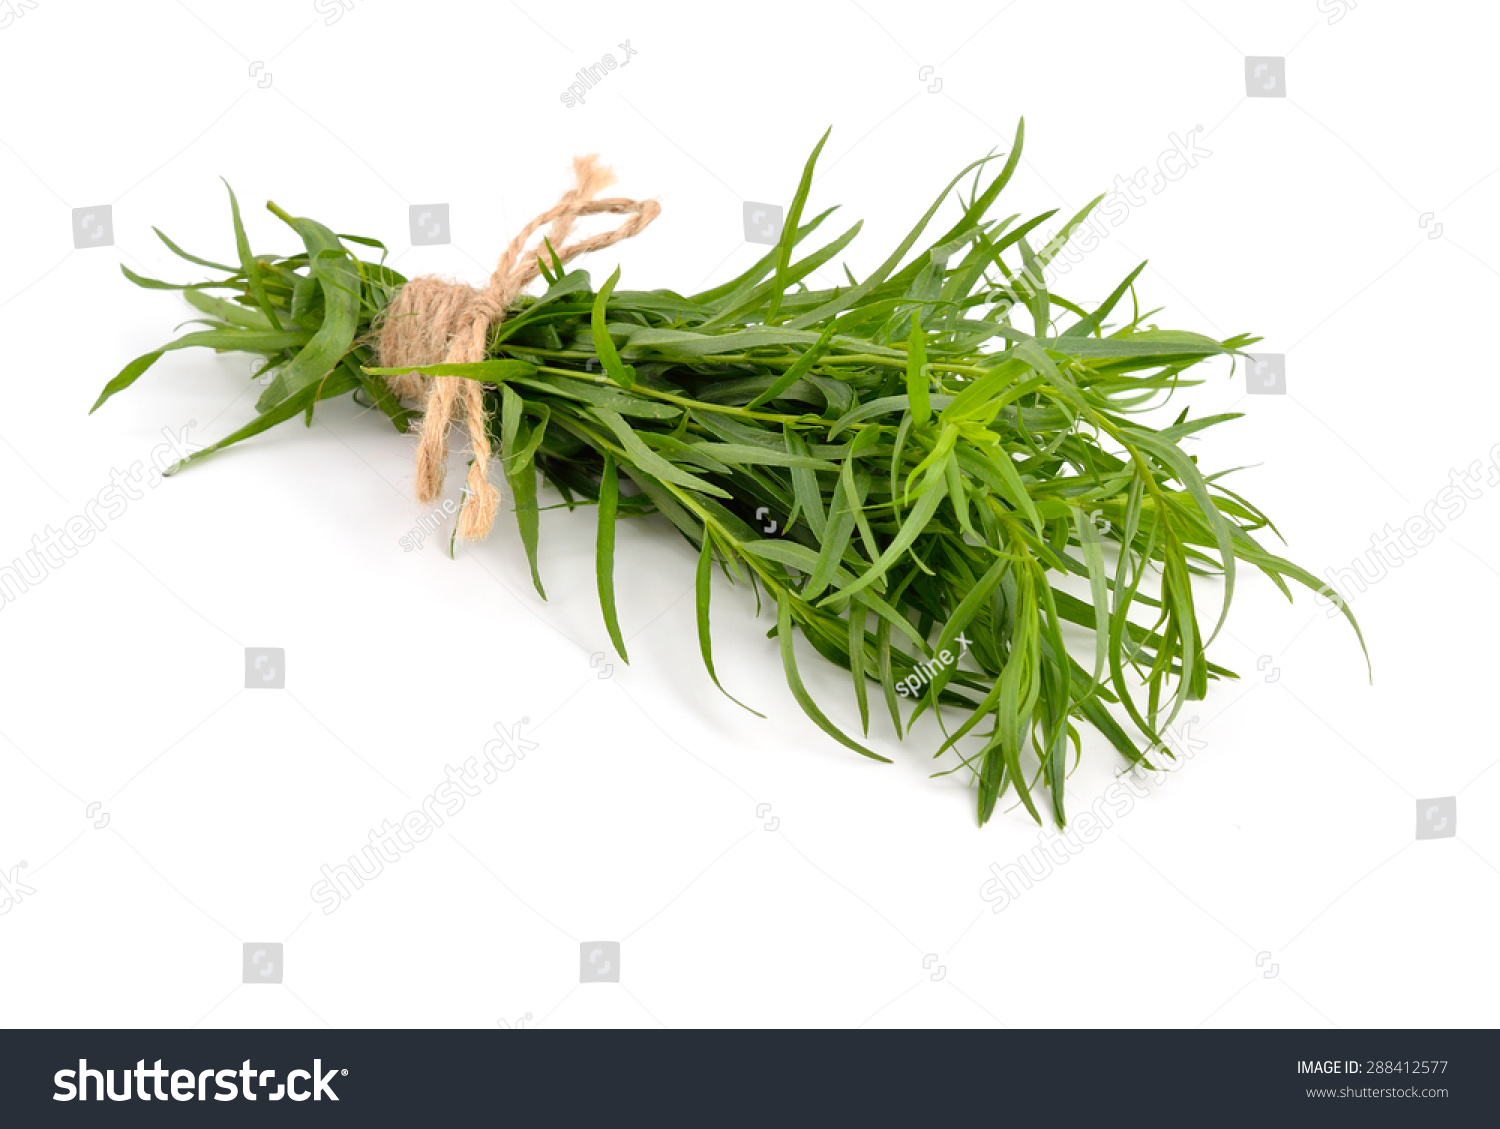 Tarragon (Artemisia dracunculus) Isolated on white background. #288412577